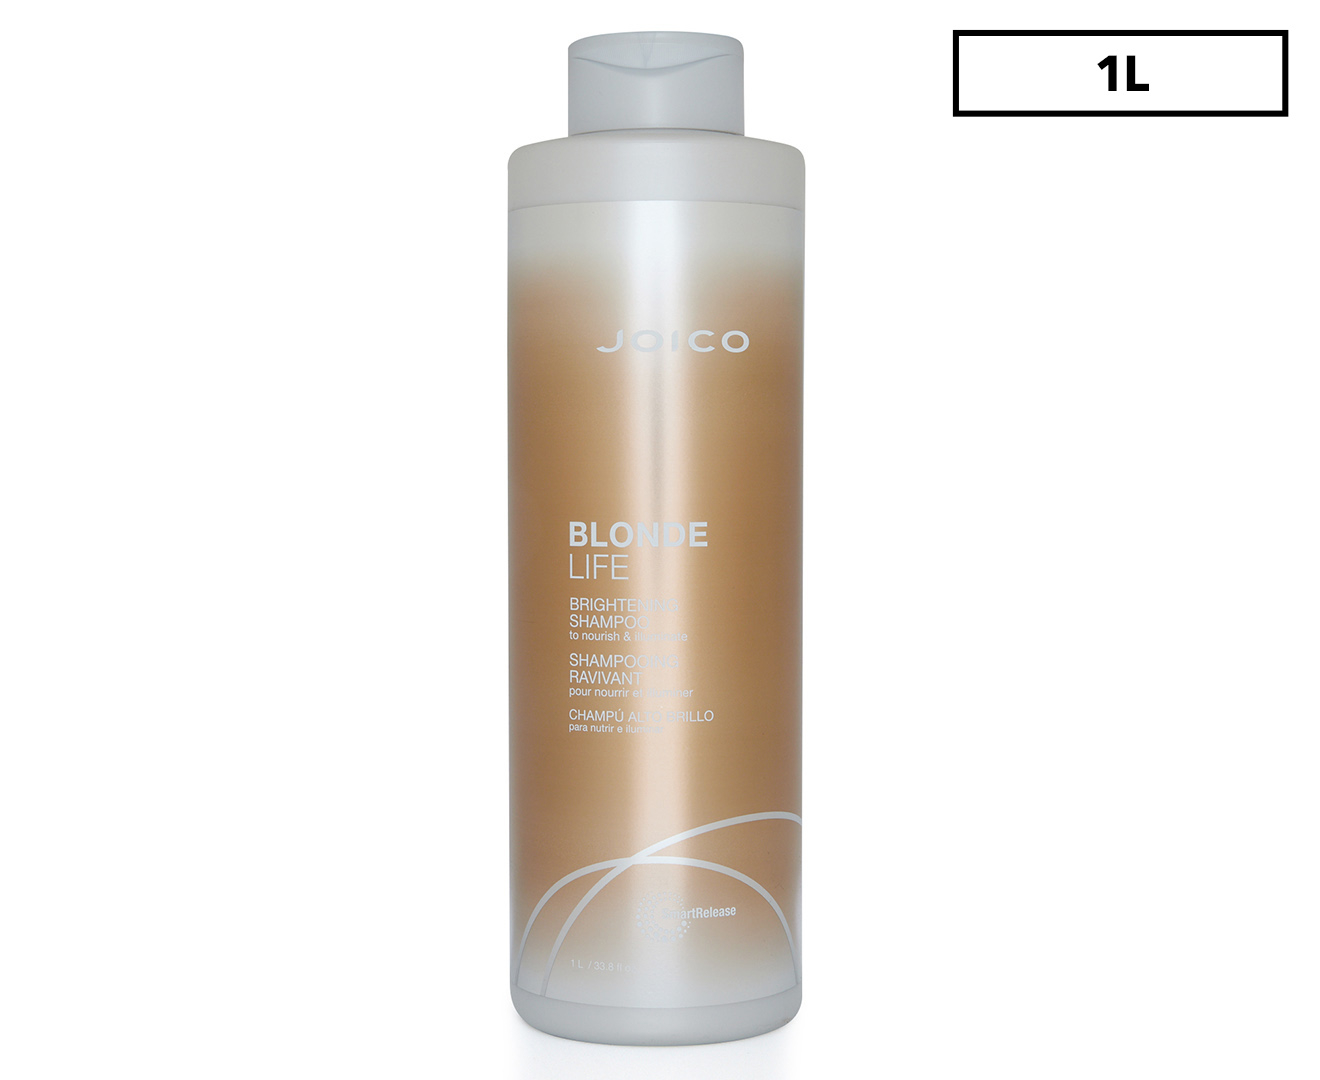 5. Joico Blonde Life Brightening Shampoo - wide 4